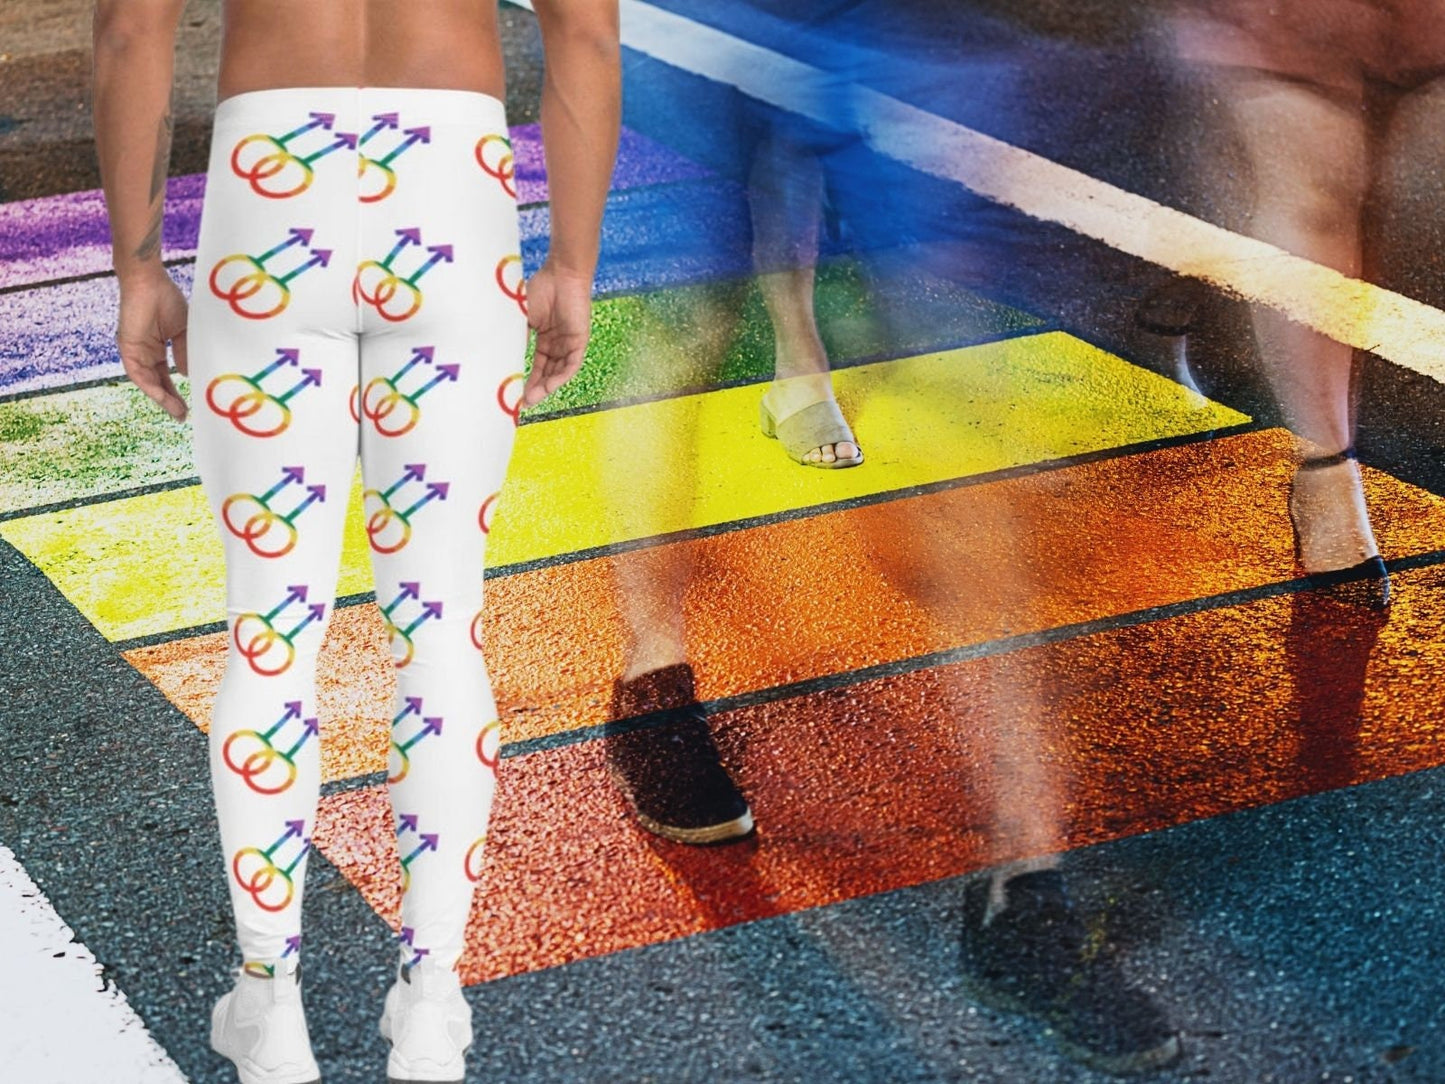 Pride Symbol Meggings for Men Activewear Leggings LGBT Gay Pride Parade Sports Workout Outfit Colorful Fun Spandex Pants Boyfriend Gift